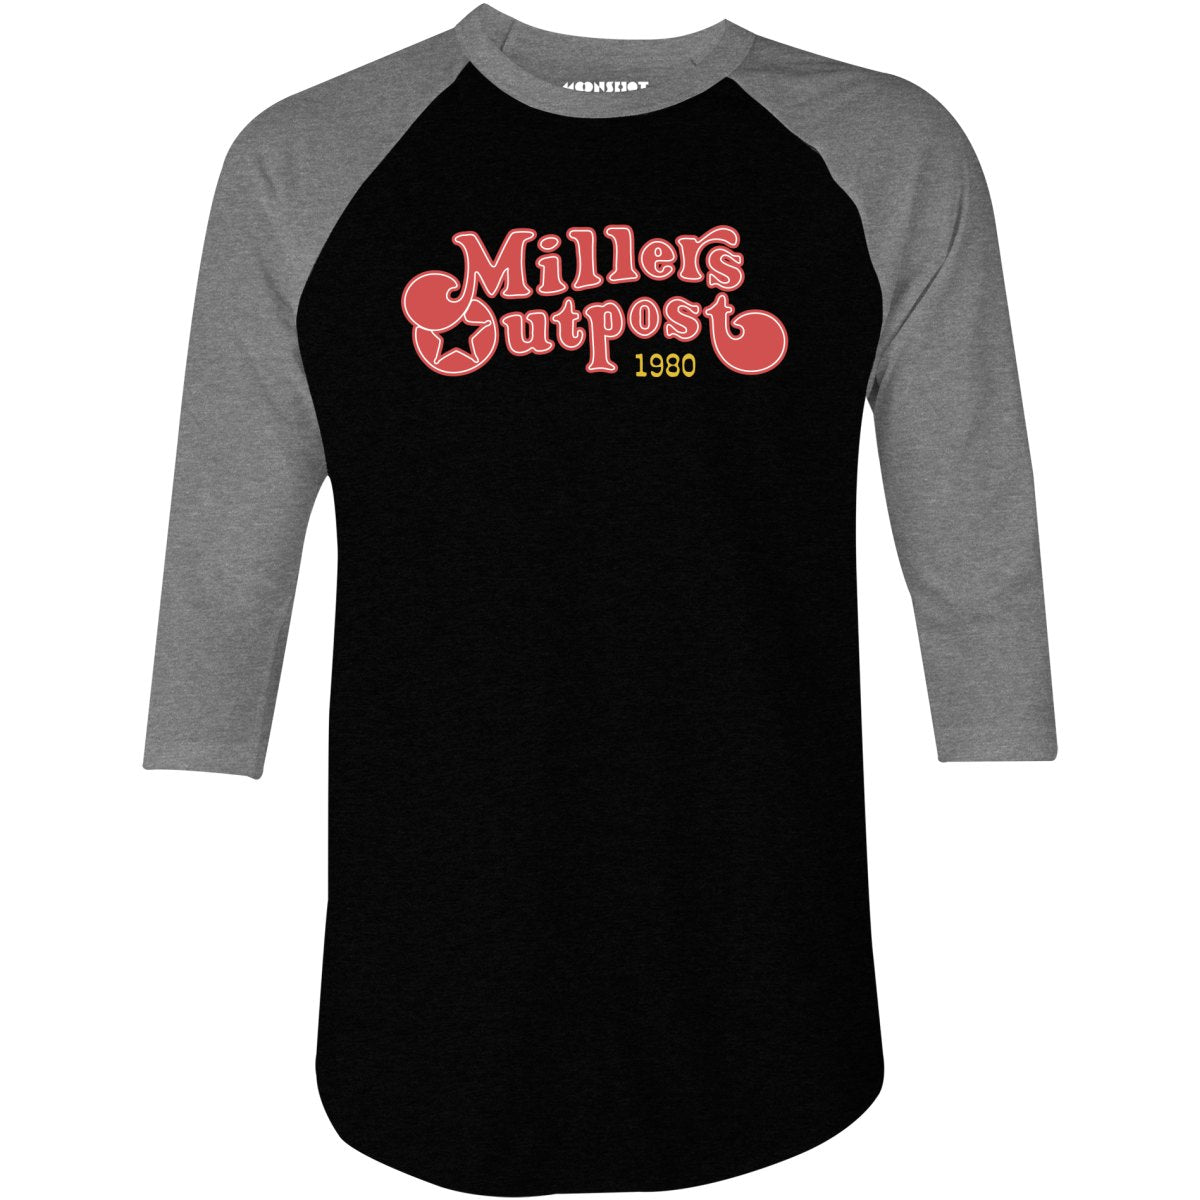 Millers Outpost - 3/4 Sleeve Raglan T-Shirt Black/Deep Heather / L